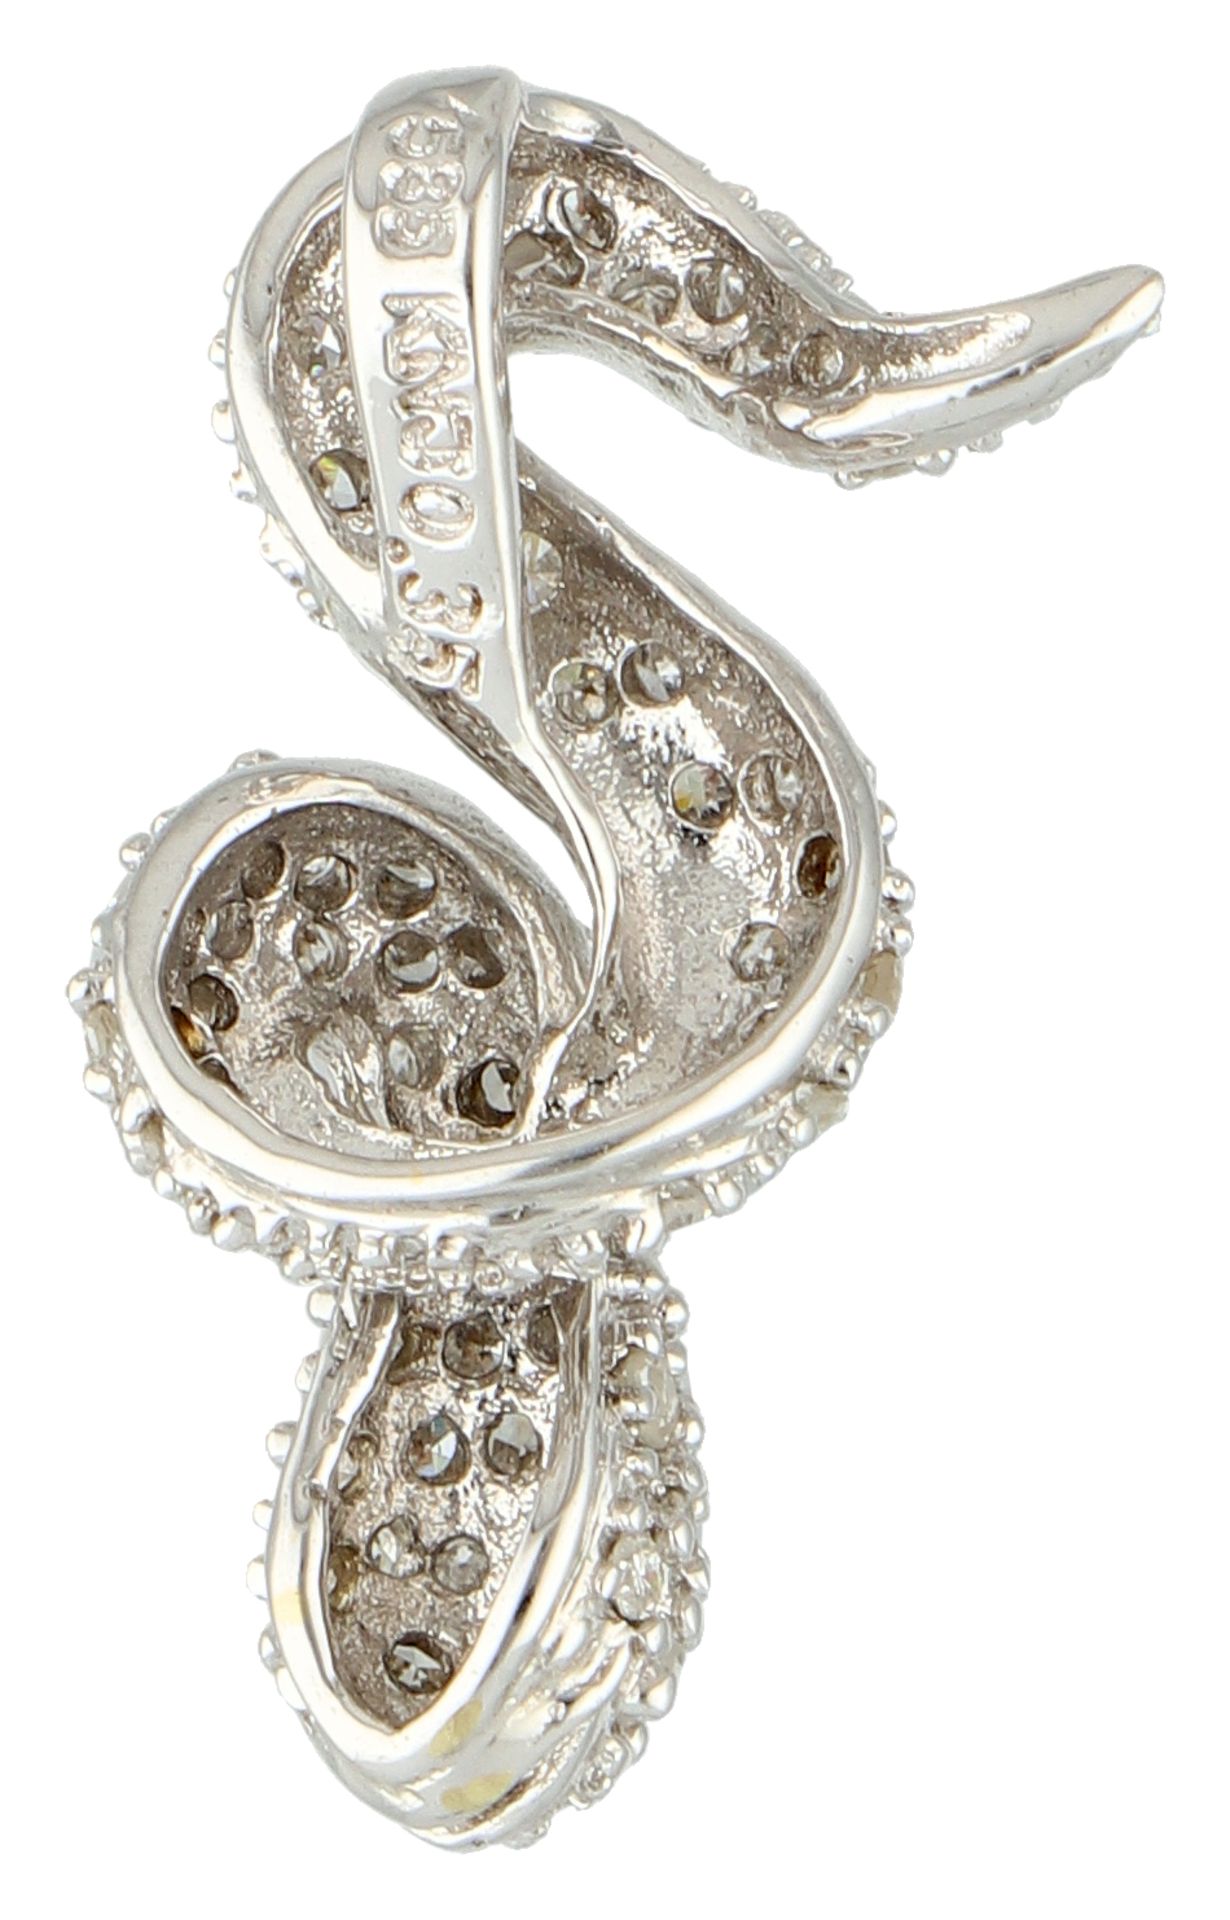 14K White gold snake pendant set with diamond. - Image 2 of 3